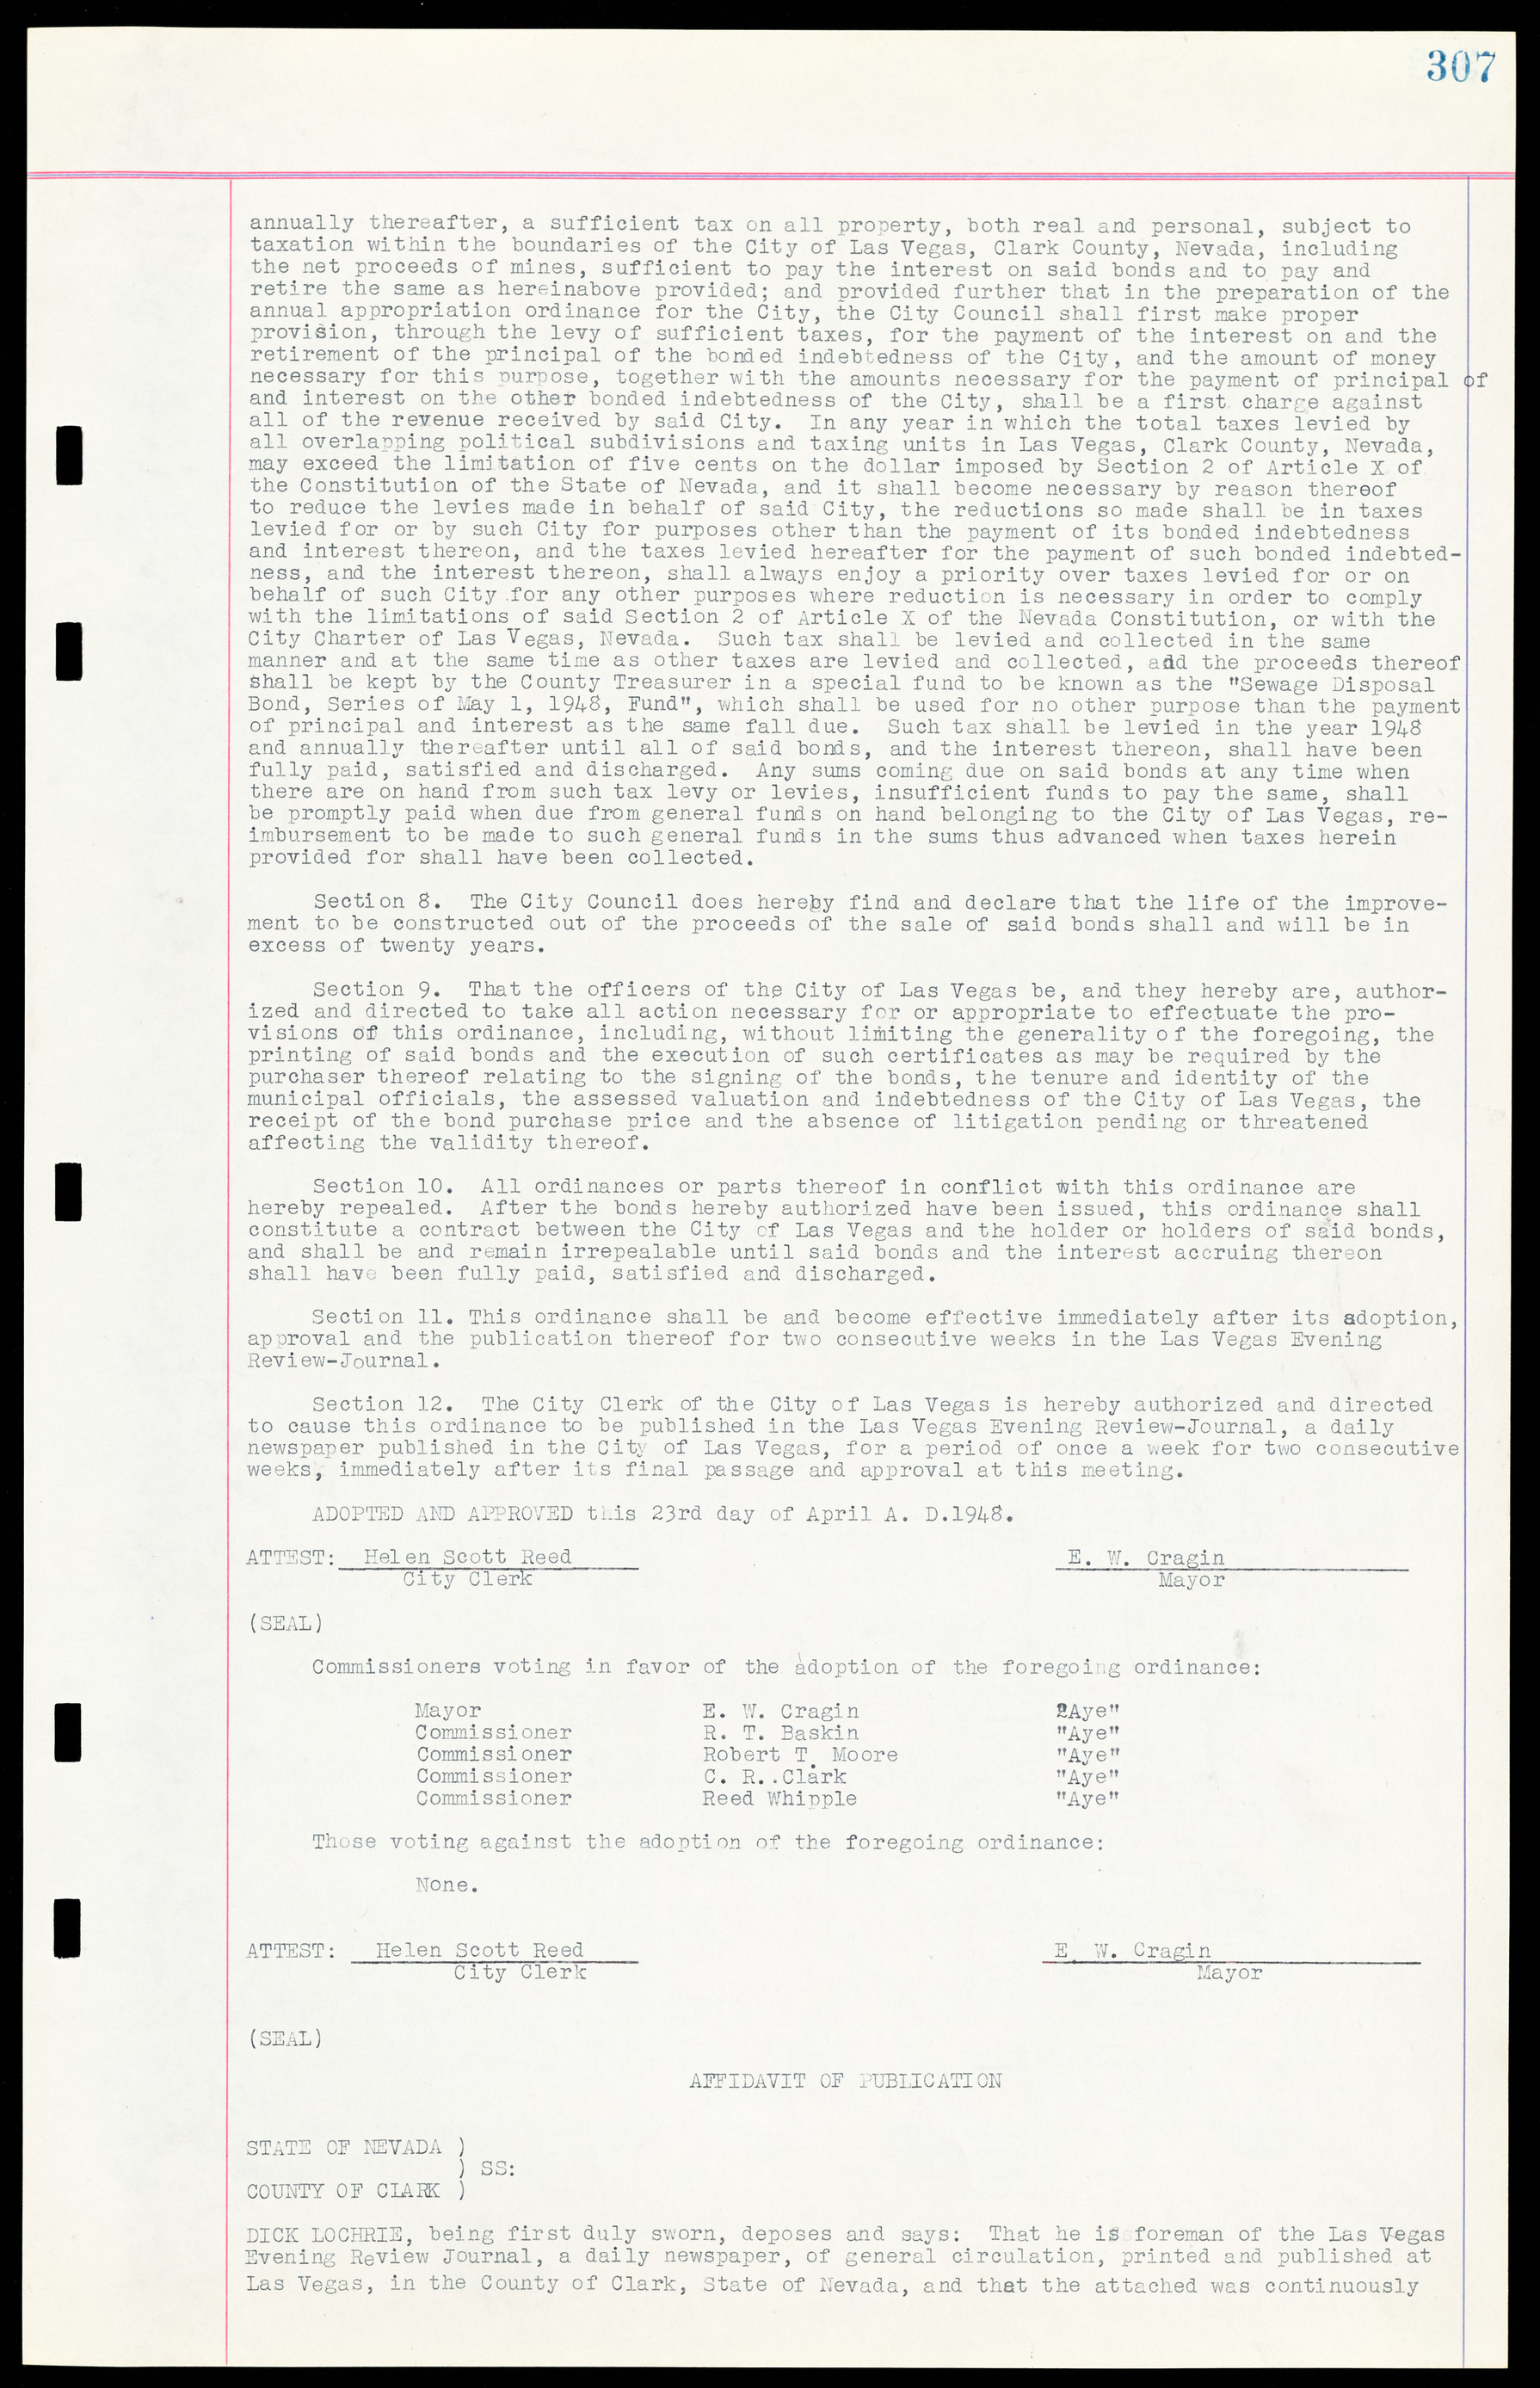 Las Vegas City Ordinances, March 31, 1933 to October 25, 1950, lvc000014-336